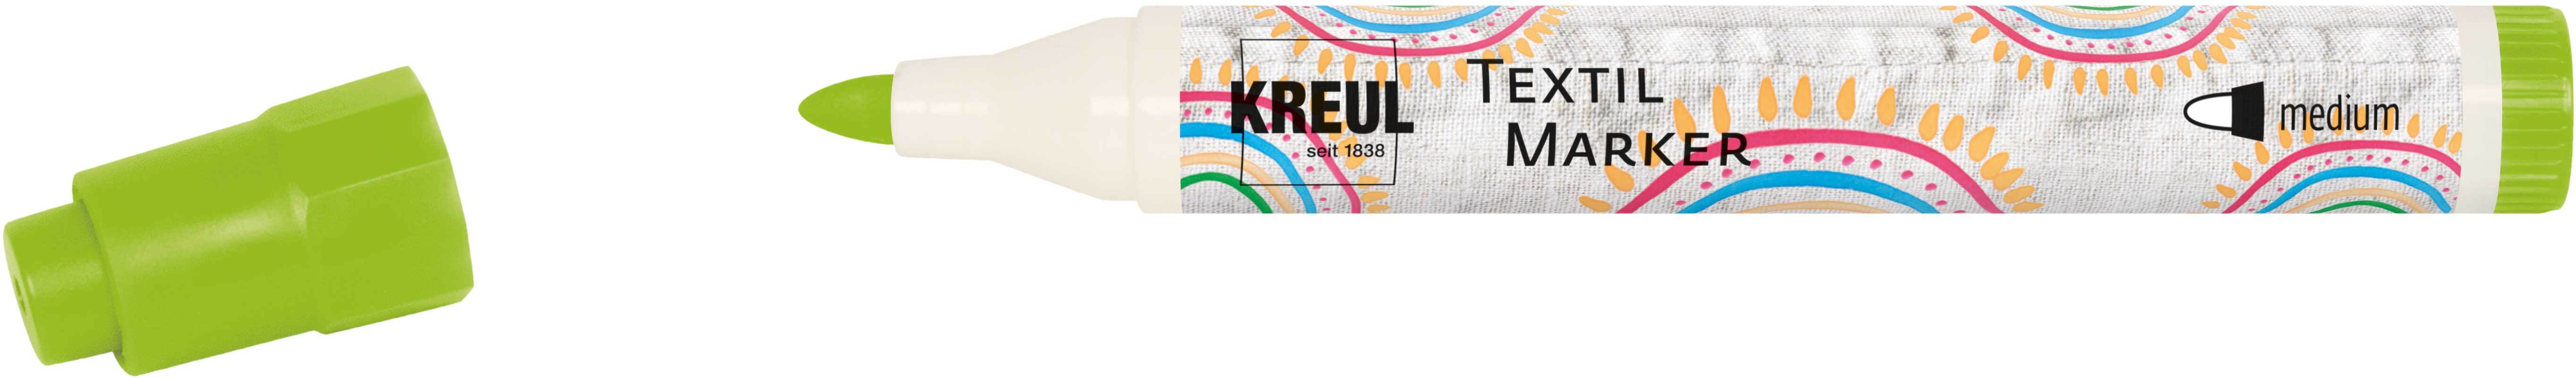 Textil Marker - medium 2-4 mm, hellgr&#xFC;n